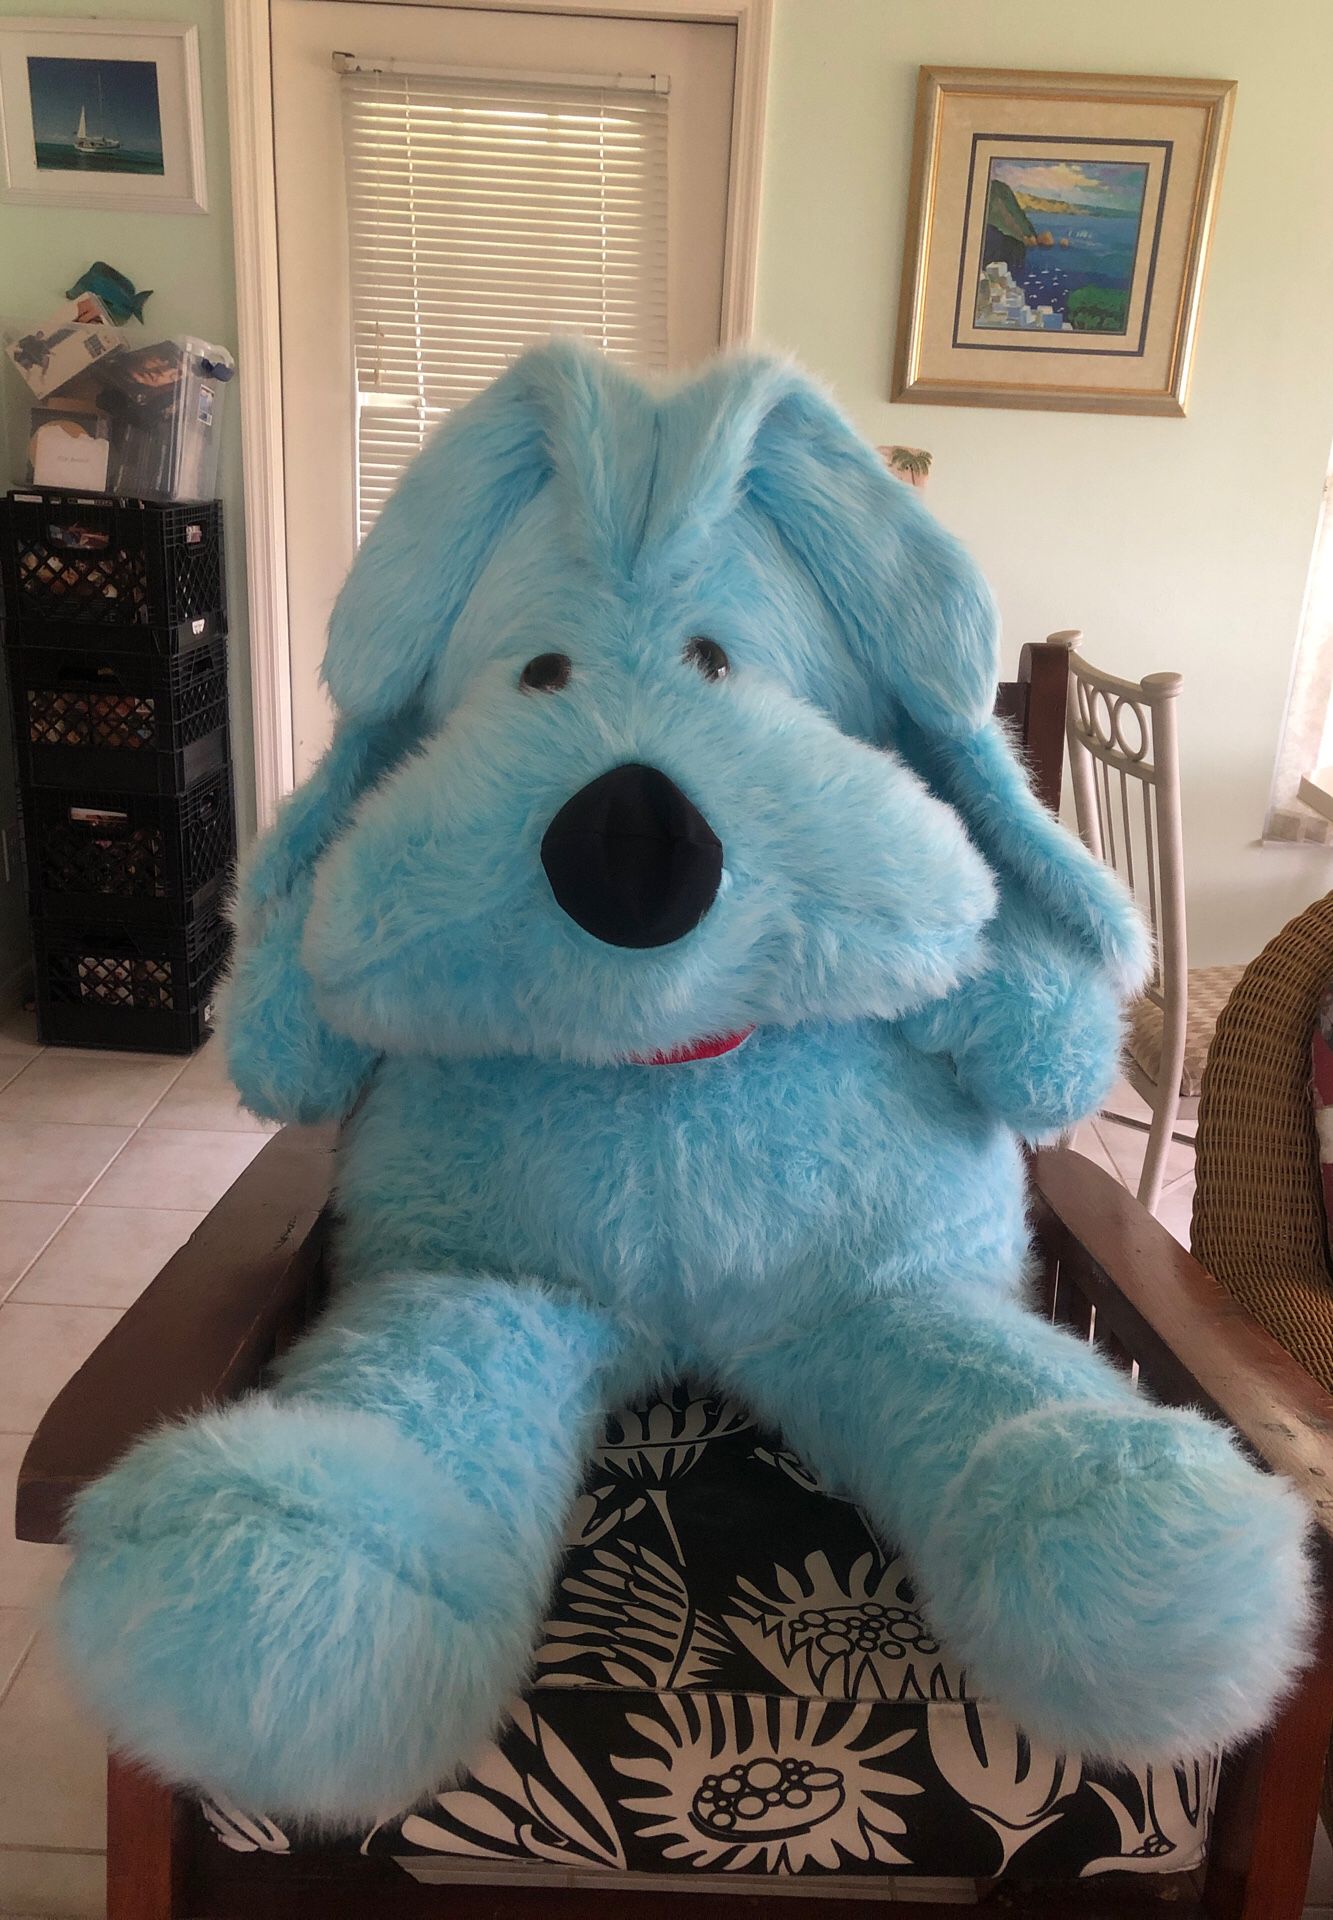 Giant blue stuffed dog